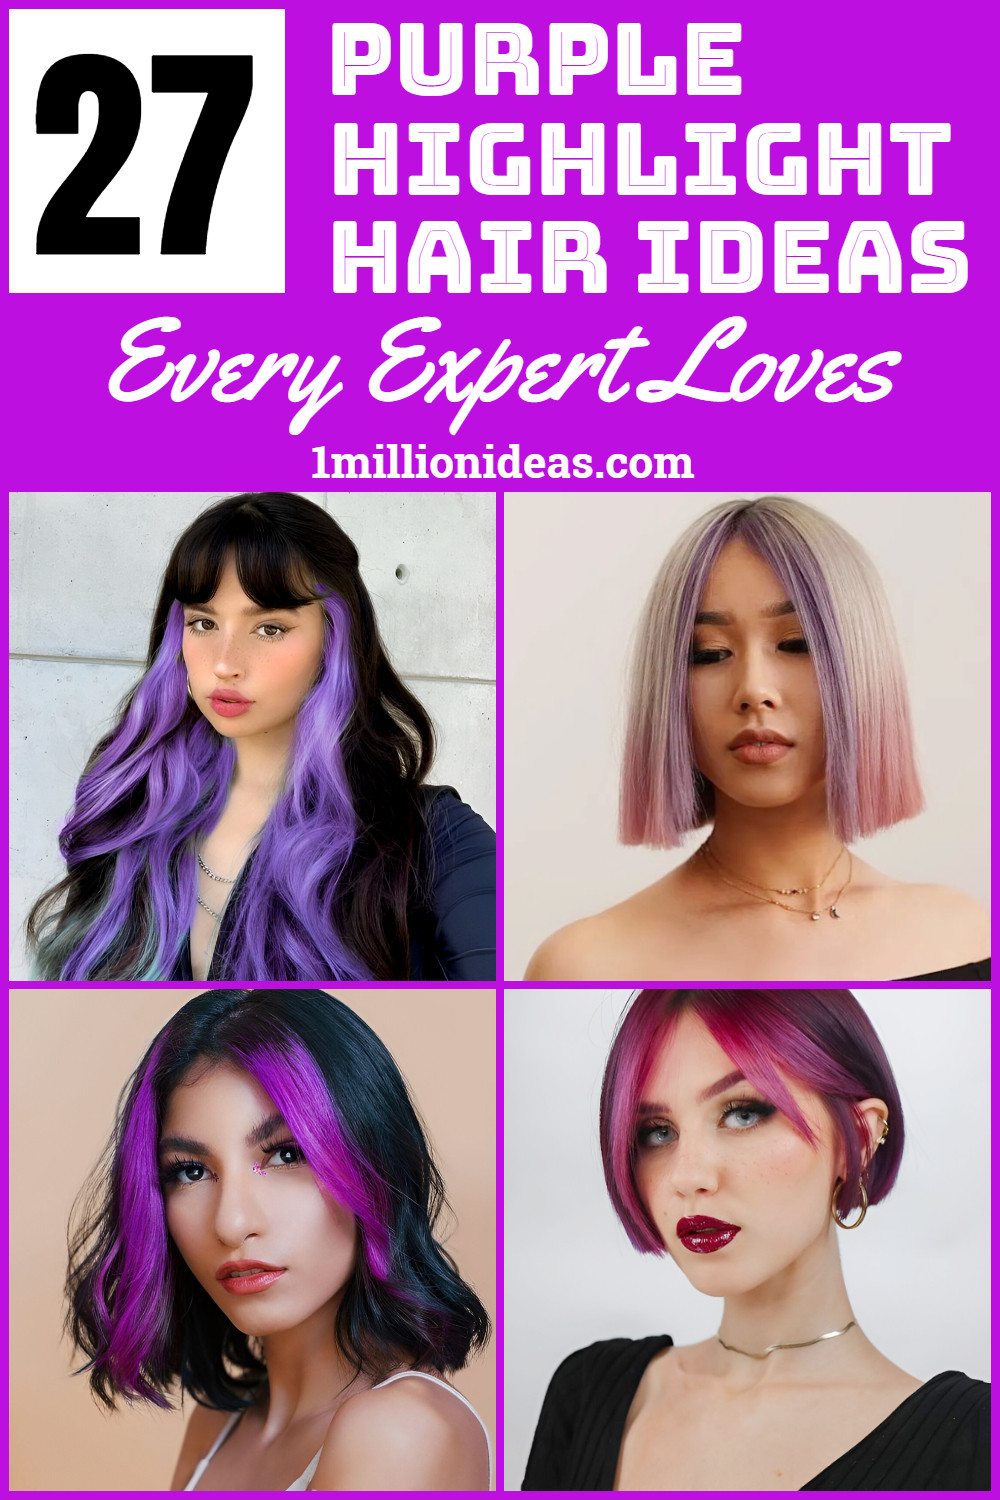 27 Purple Highlight Hair Ideas That Every Expert Loves - 173